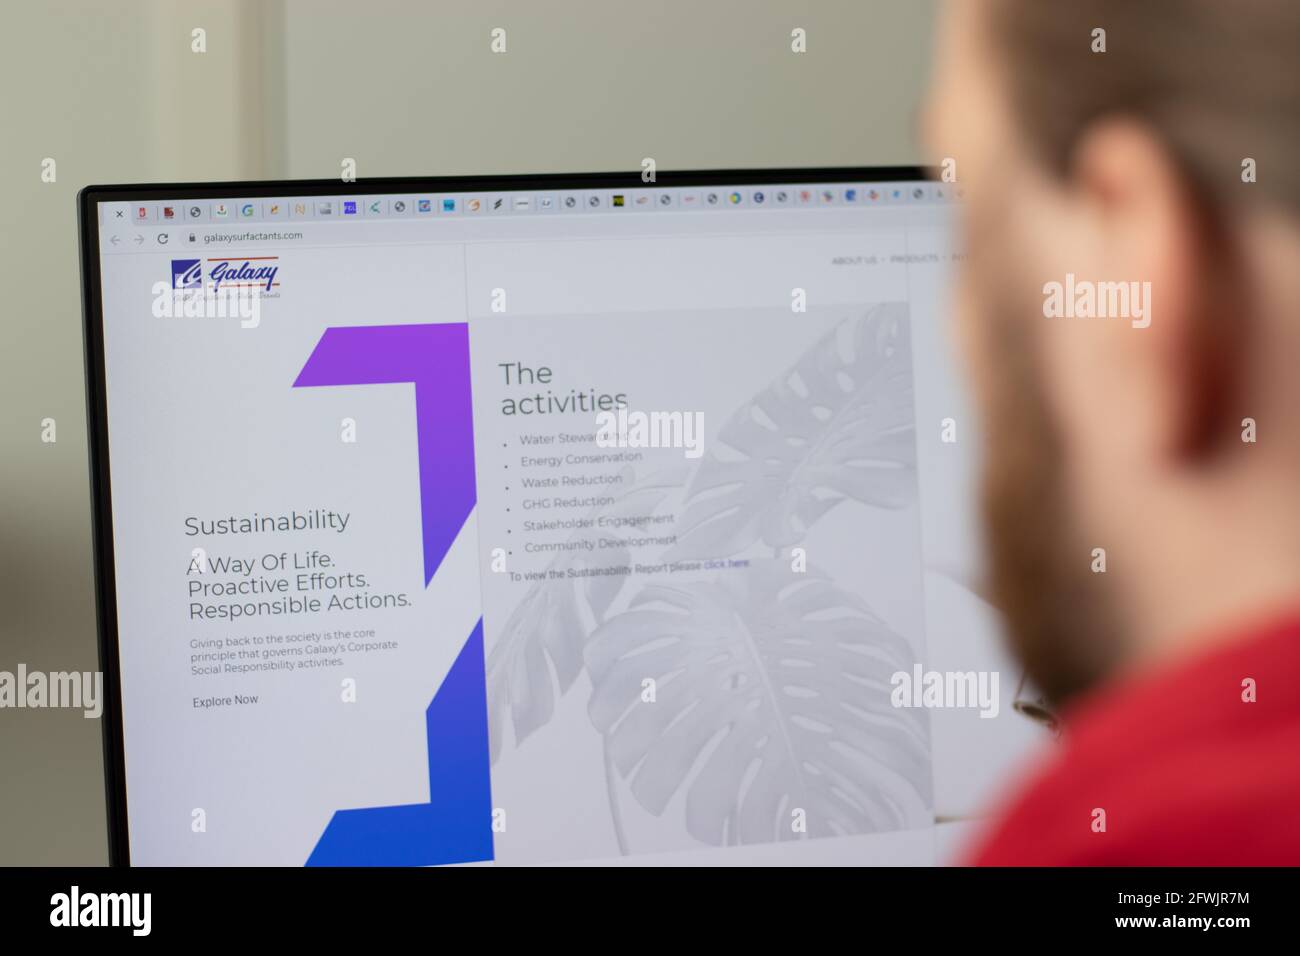 New York, USA - 1 May 2021: Galaxy Surfactants company website with logo on screen, Illustrative Editorial Stock Photo